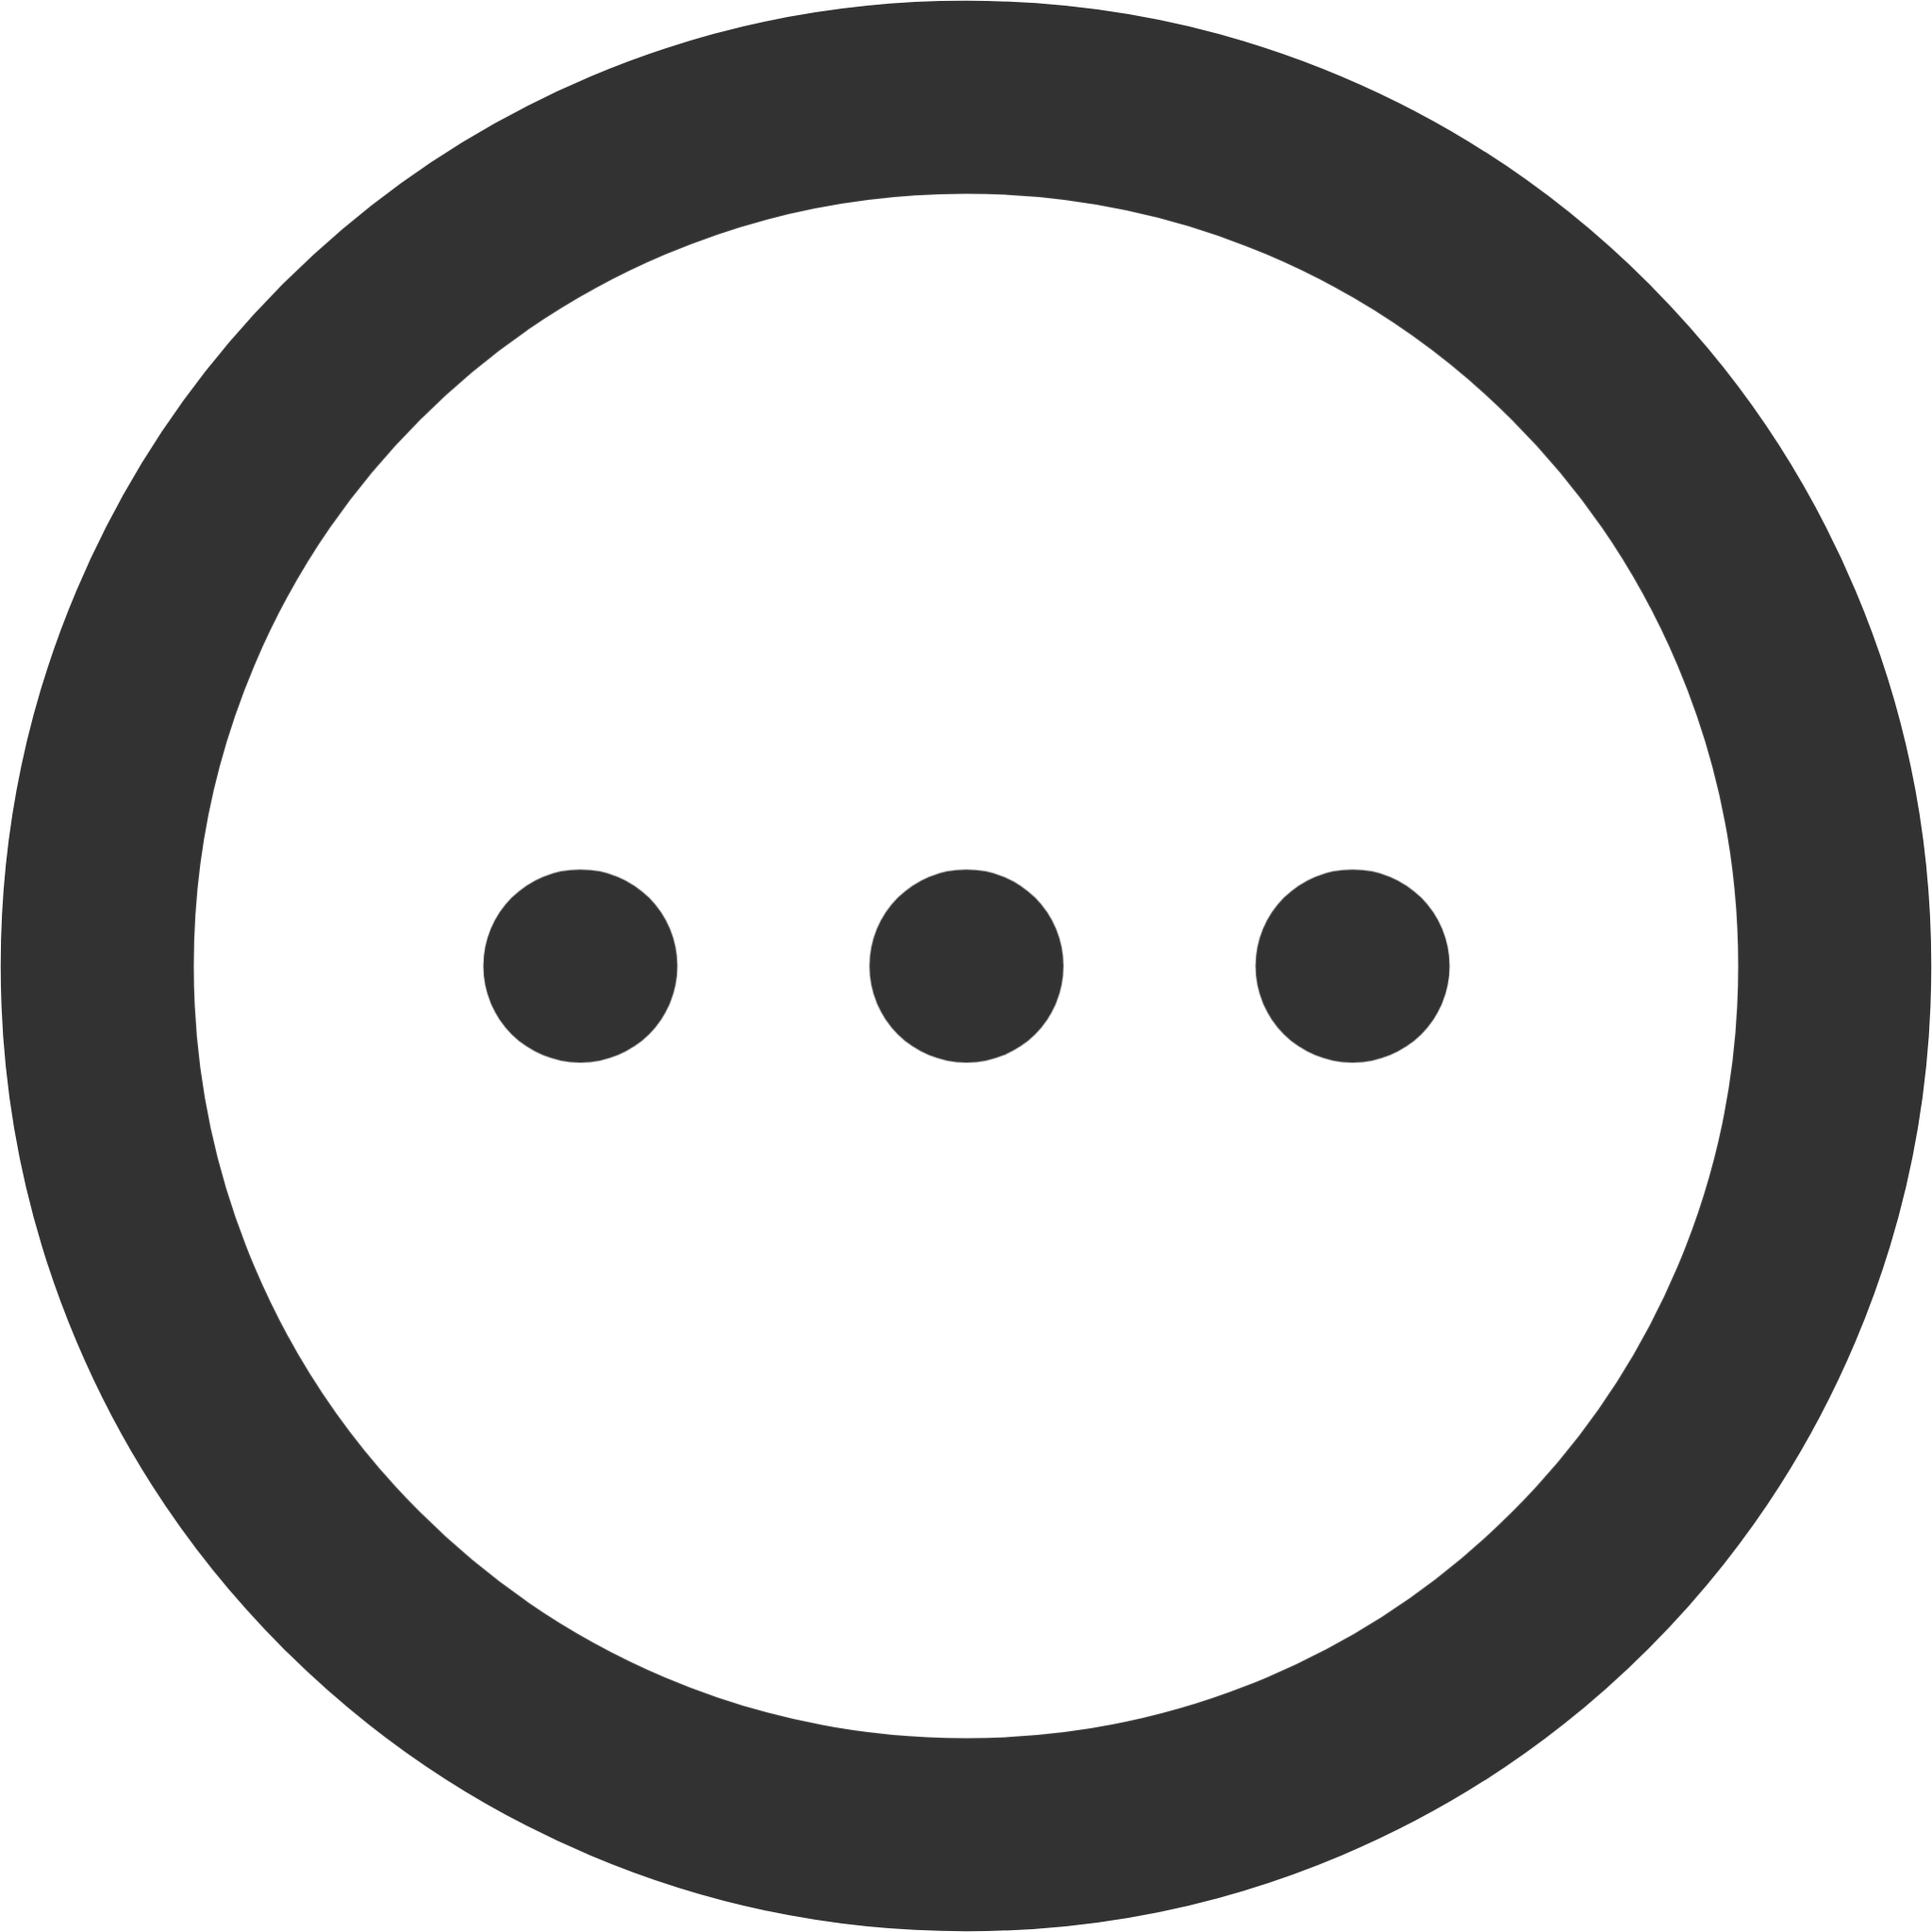 more horizontal circle icon